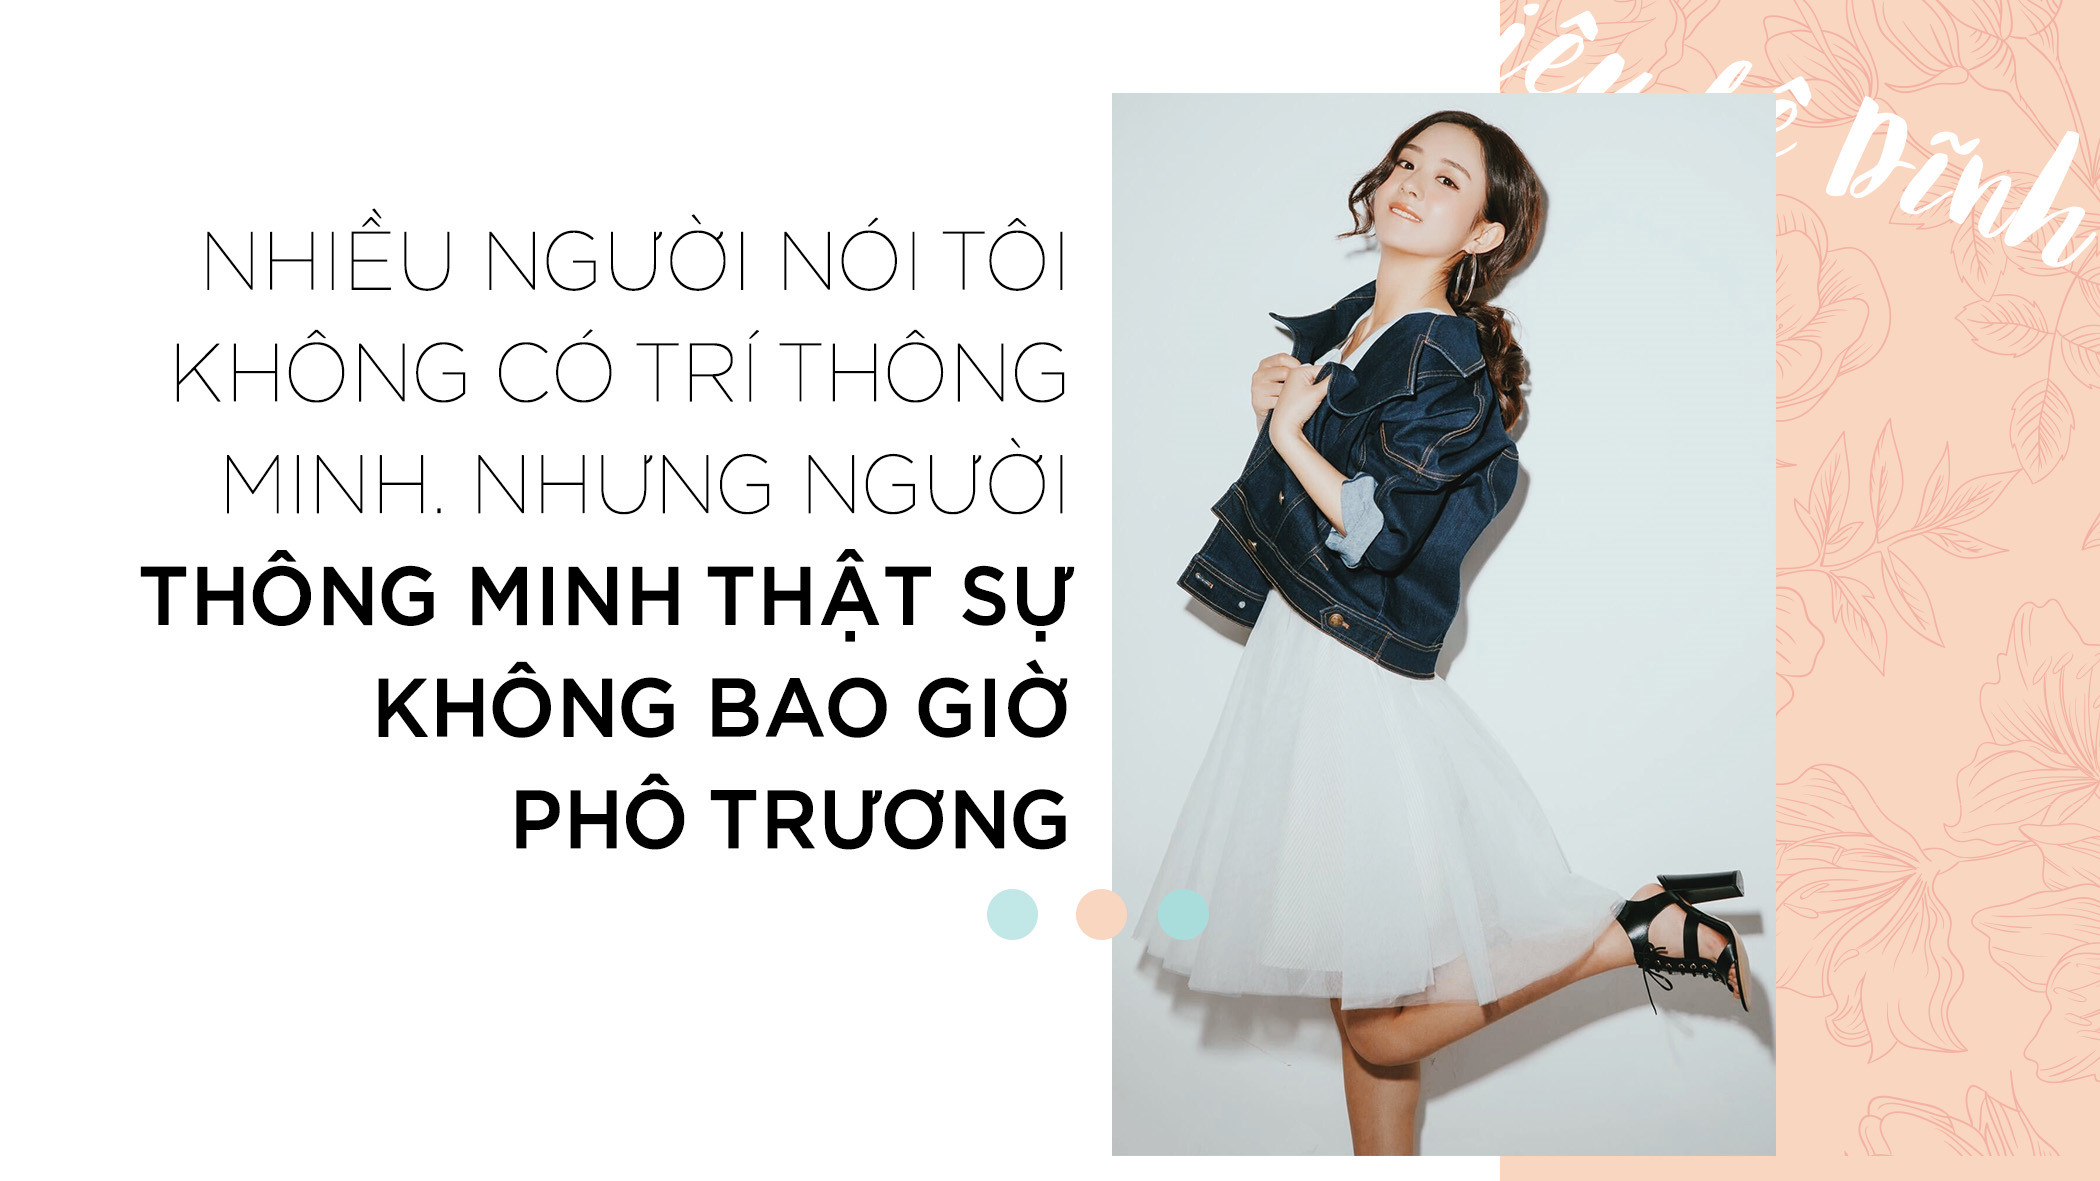 Trieu Le Dinh: Ngoi sao bi xem thuong tu gia canh den nhan cach hinh anh 3